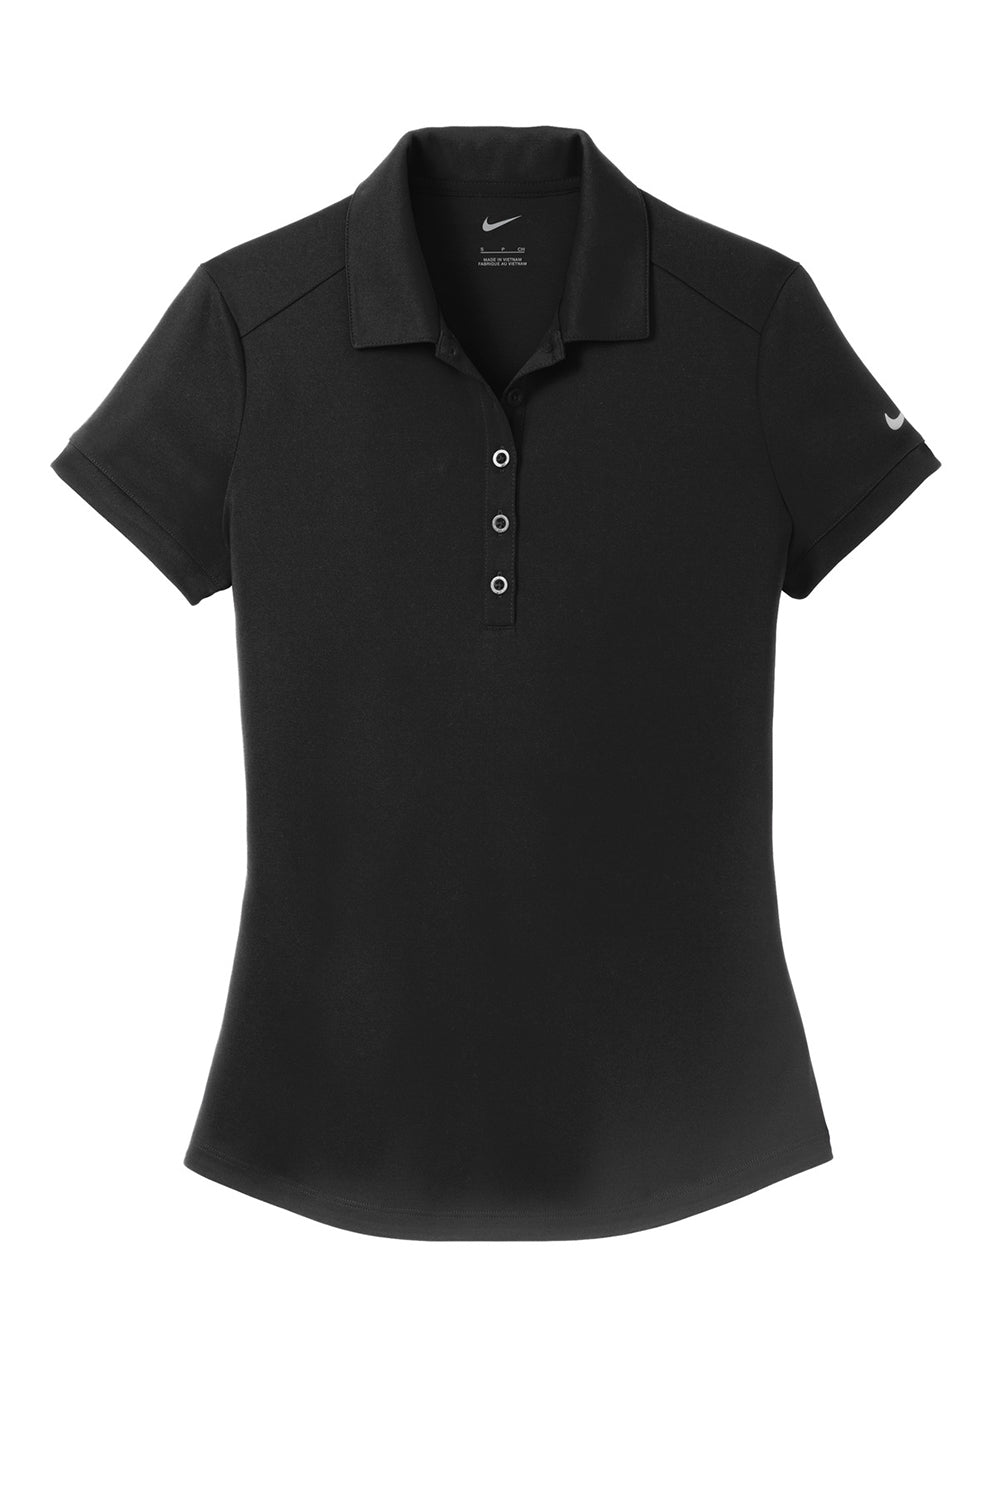 Nike 811807 Womens Players Dri-Fit Moisture Wicking Short Sleeve Polo Shirt Black Flat Front